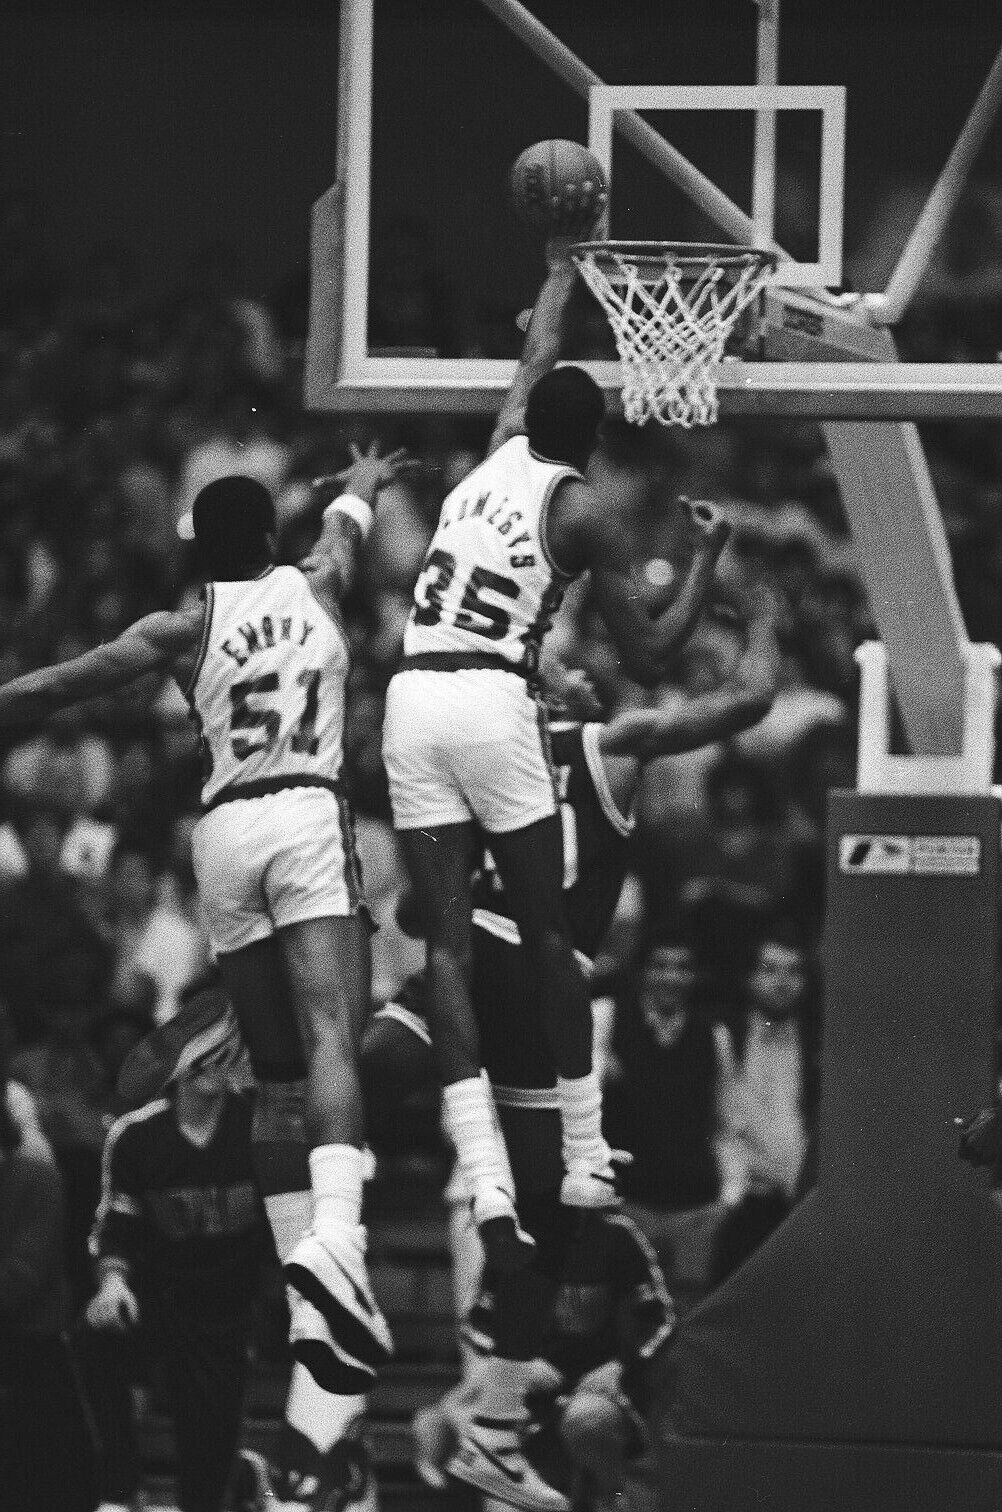 LD125-46 1986 College Basketball DePaul UAB Blazers (55) ORIG 35mm B&W NEGATIVES Без бренда - фотография #6